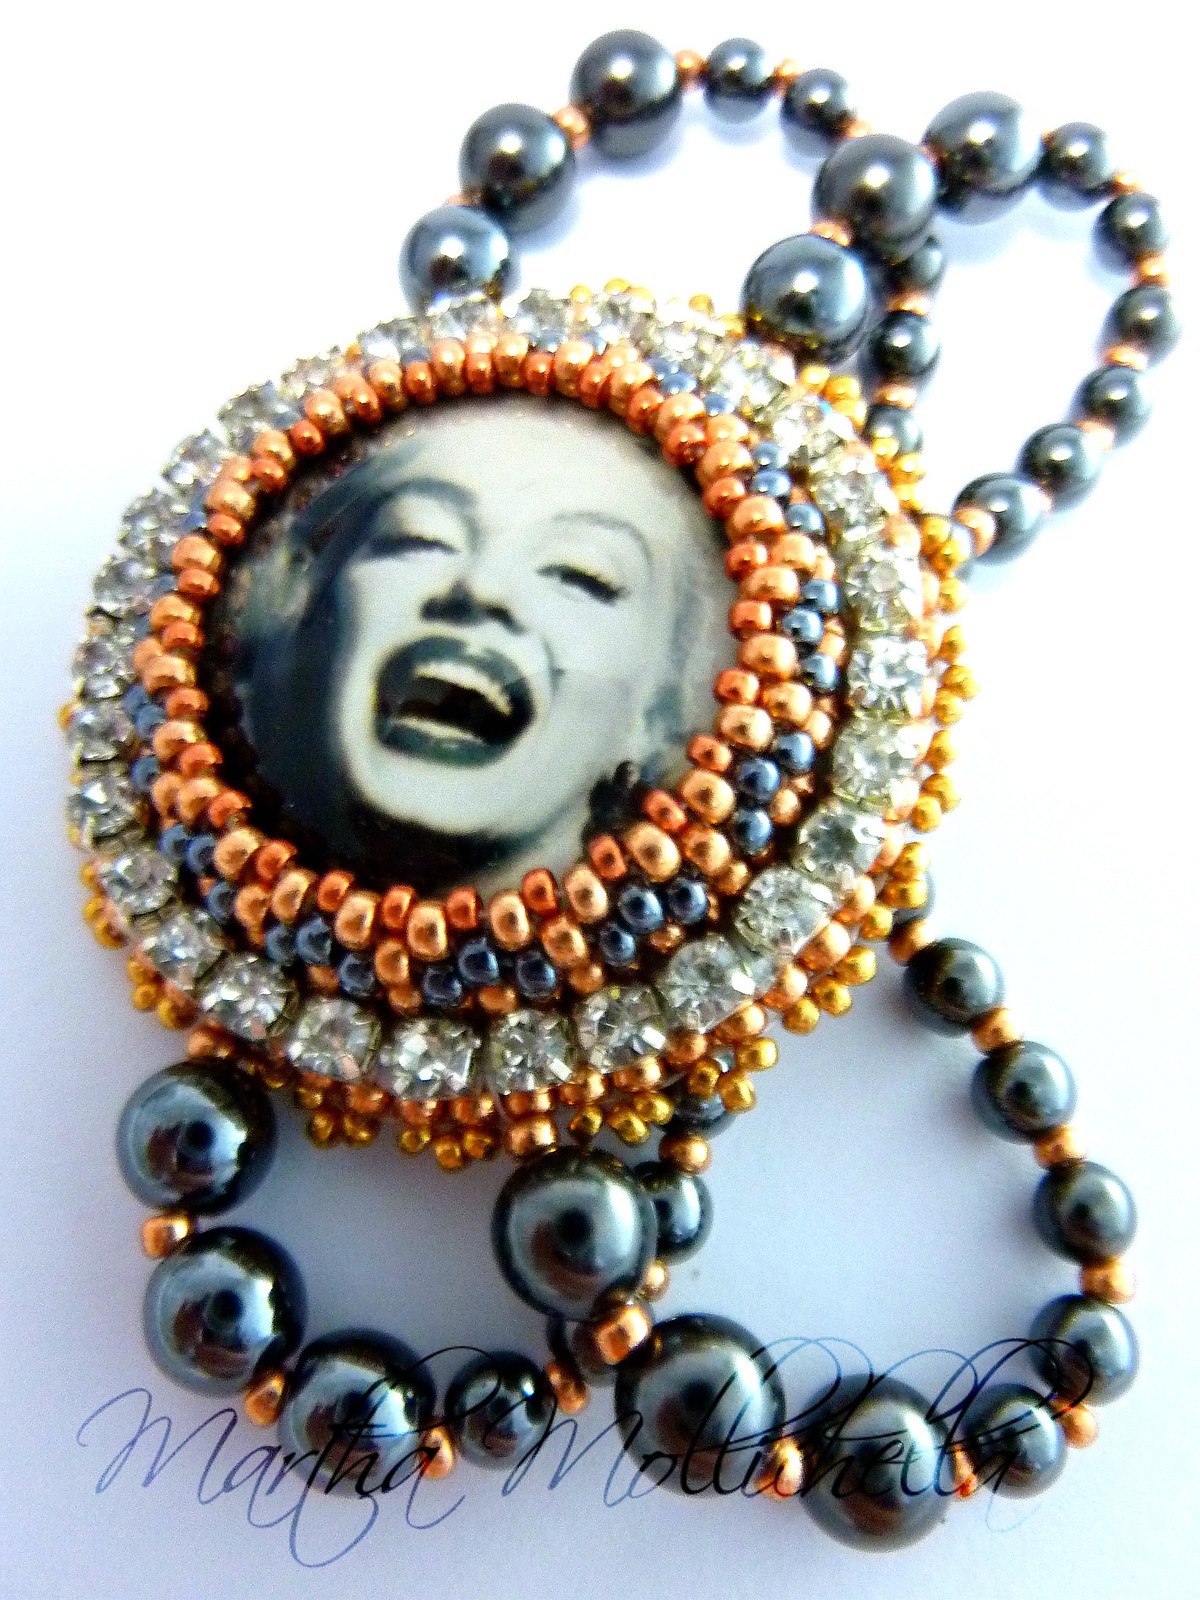 Marilyn Monroe Audrey Hepburn jewellery